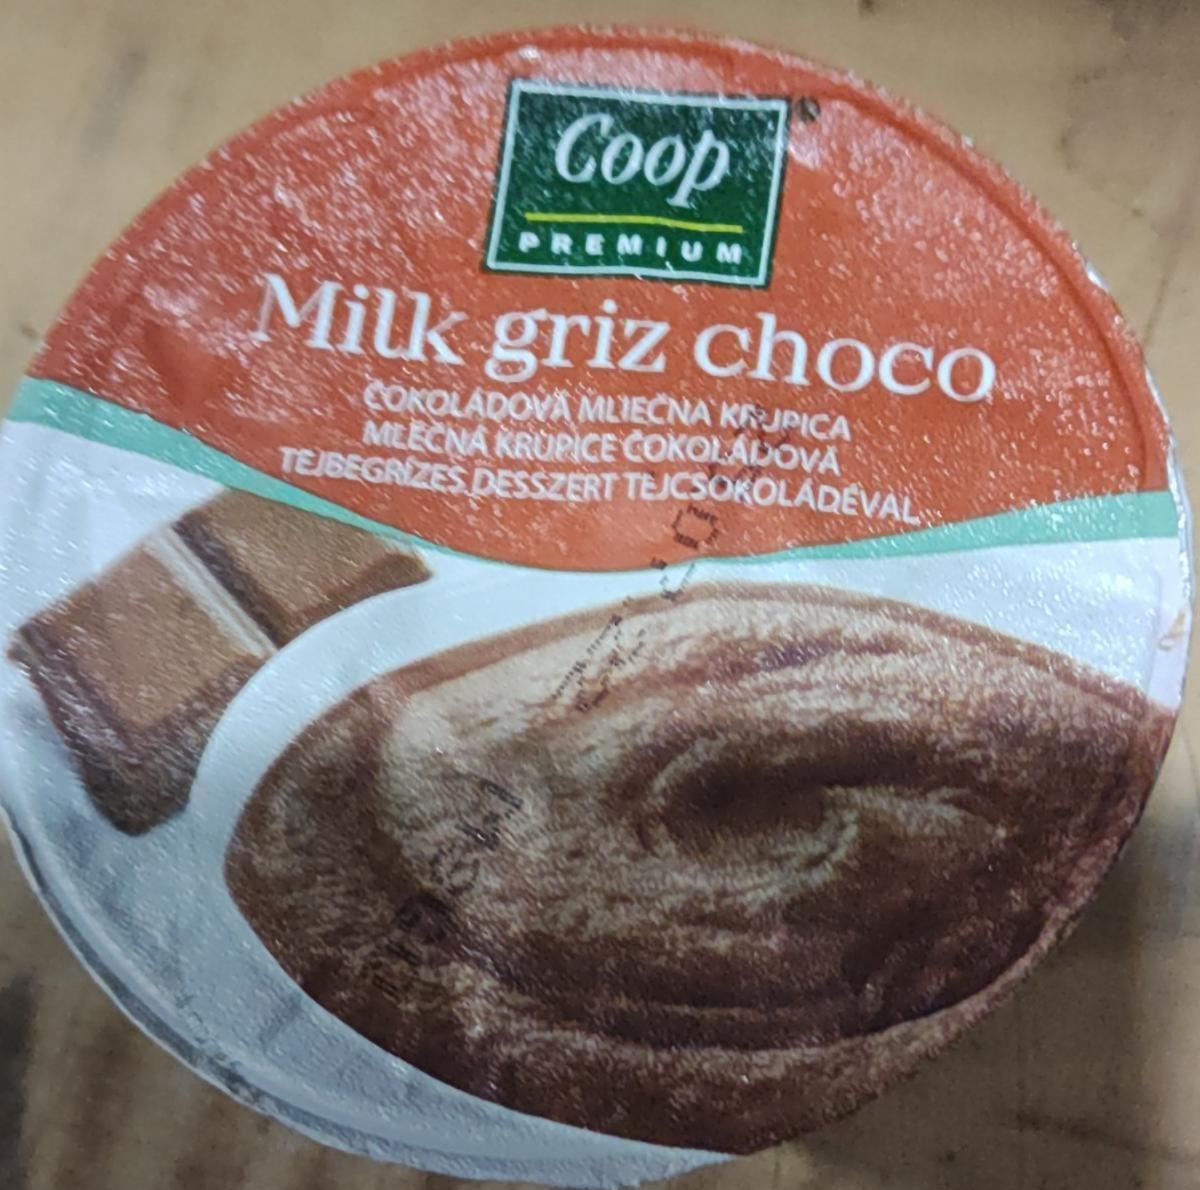 Képek - Milk Griz Choco Coop Premium